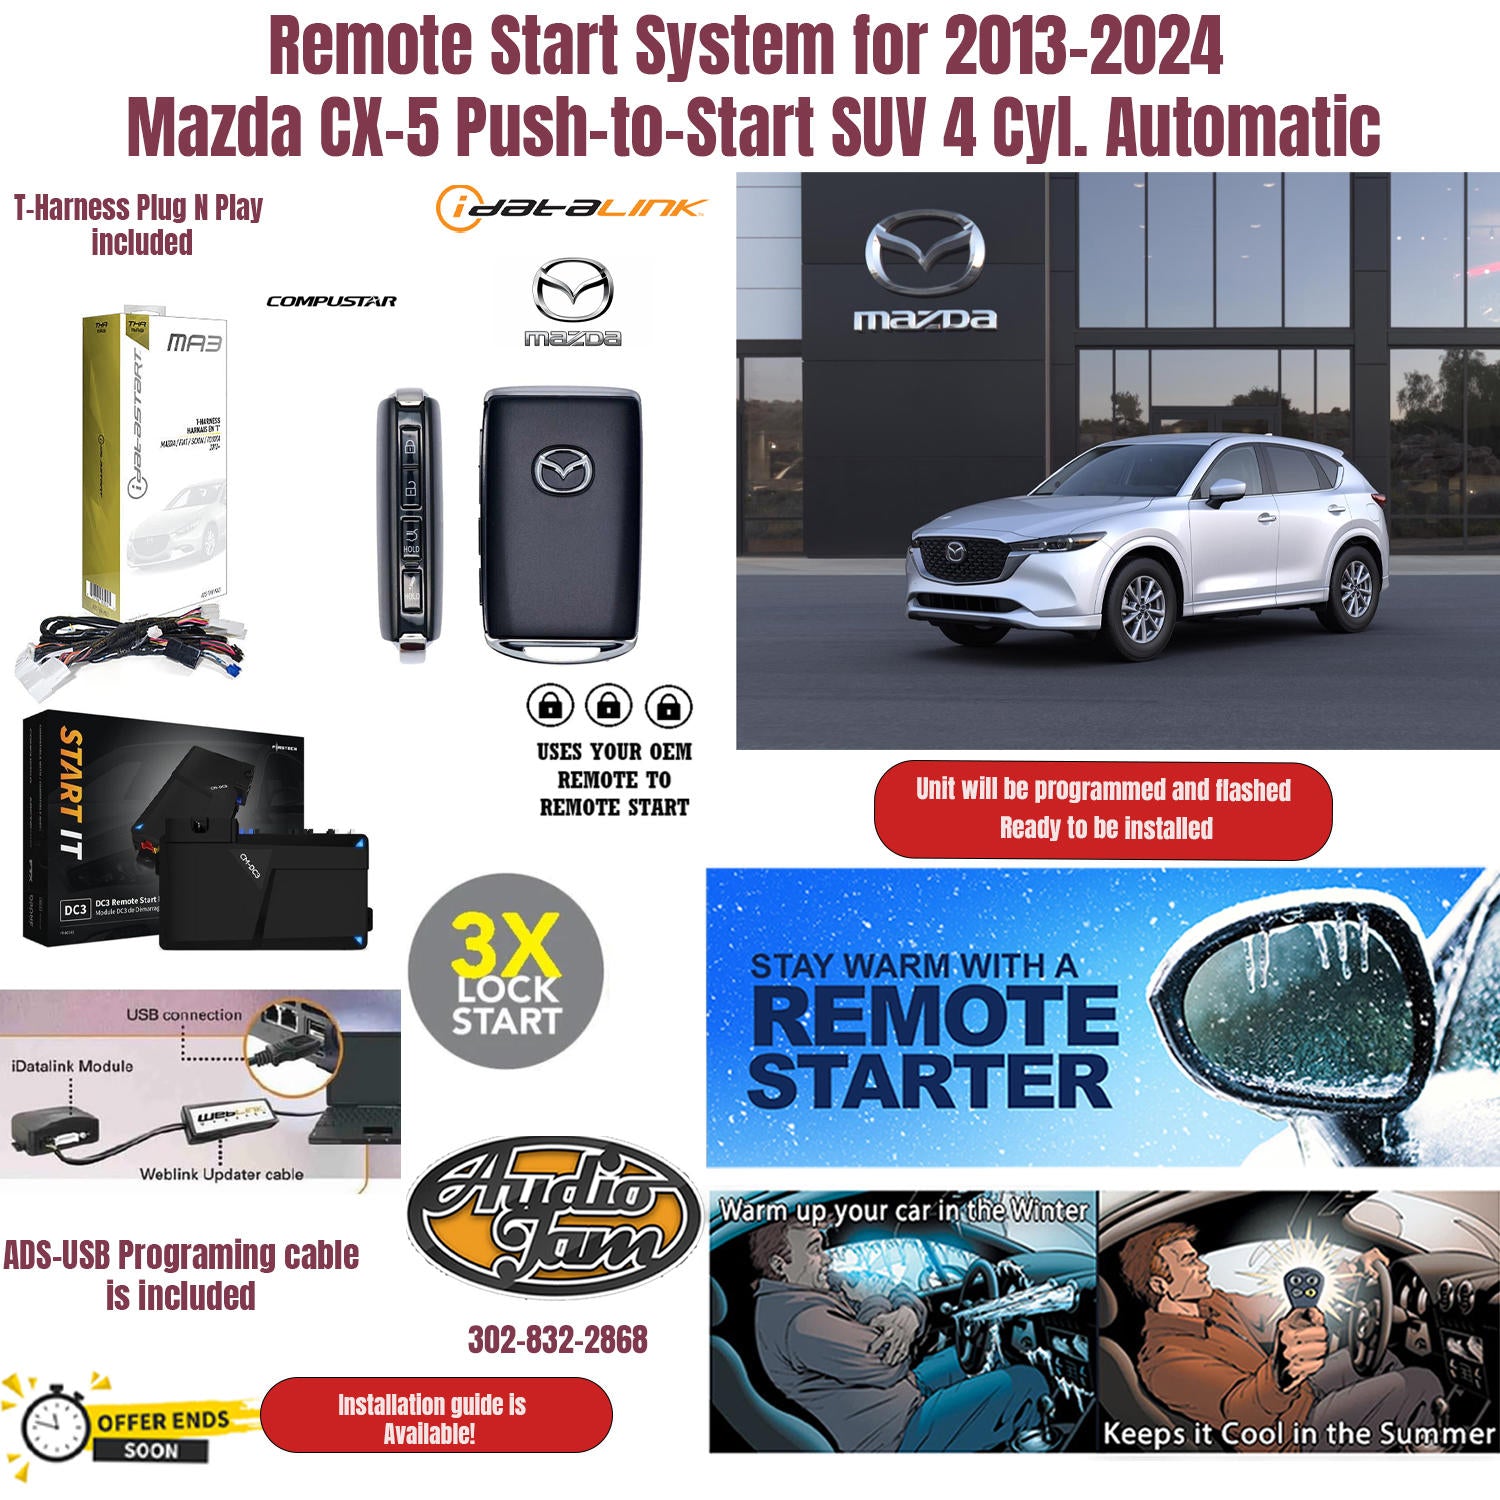 Remote Start System for 2013-2024 Mazda CX-5 Push-to-Start SUV 4 Cyl.